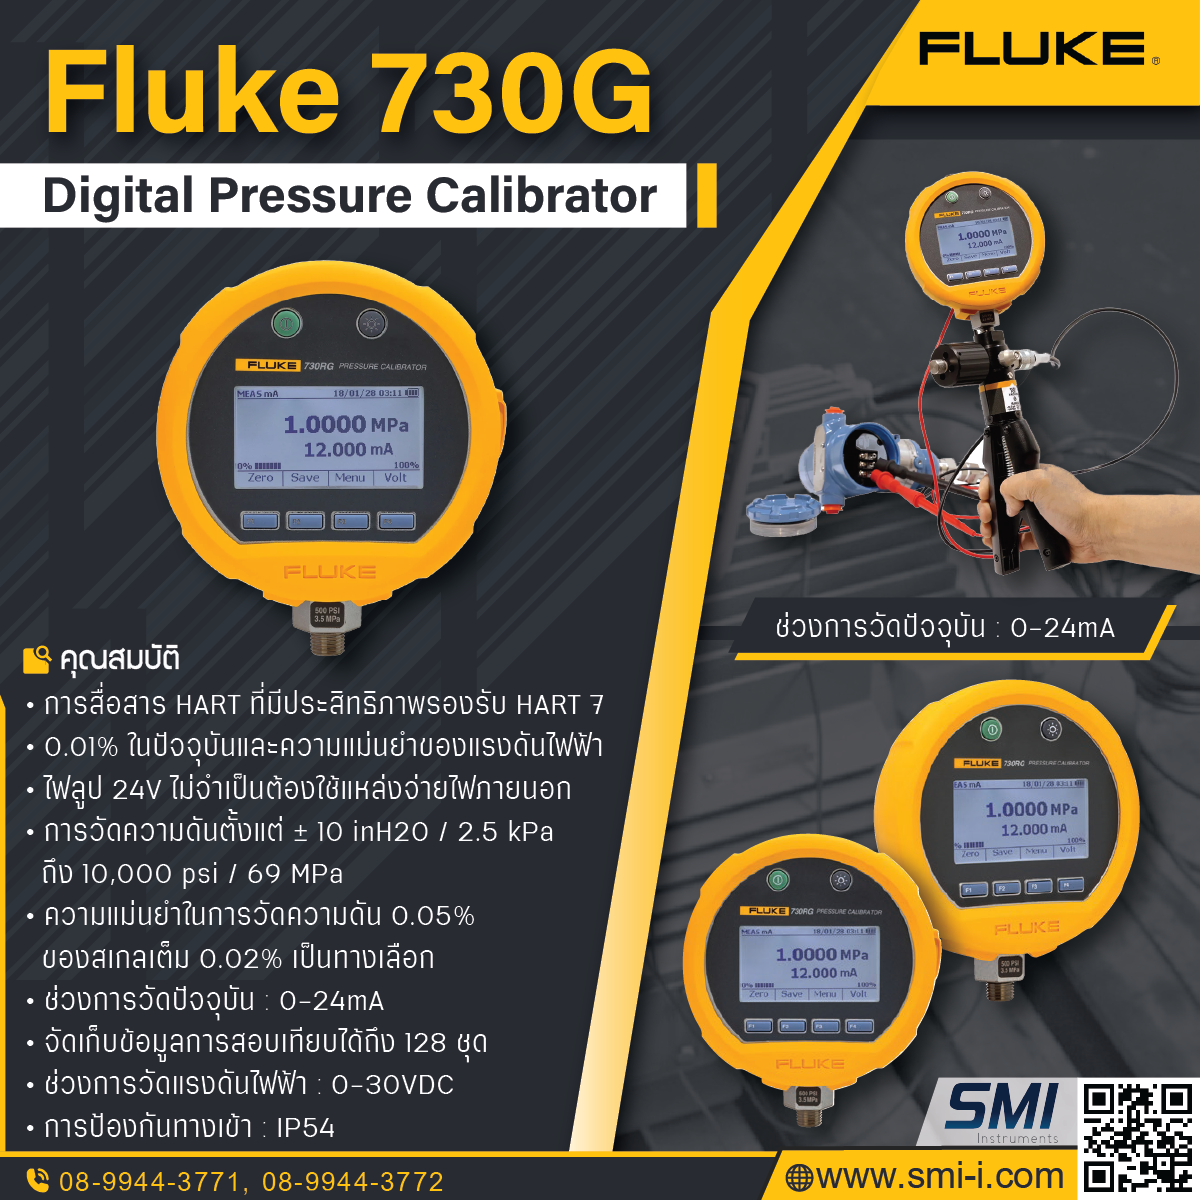 FLUKE - 730G Smart Digital Pressure Calibrator (± 10 in H2O/2.5 kPa to 10000 psi/69 MPa) graphic information